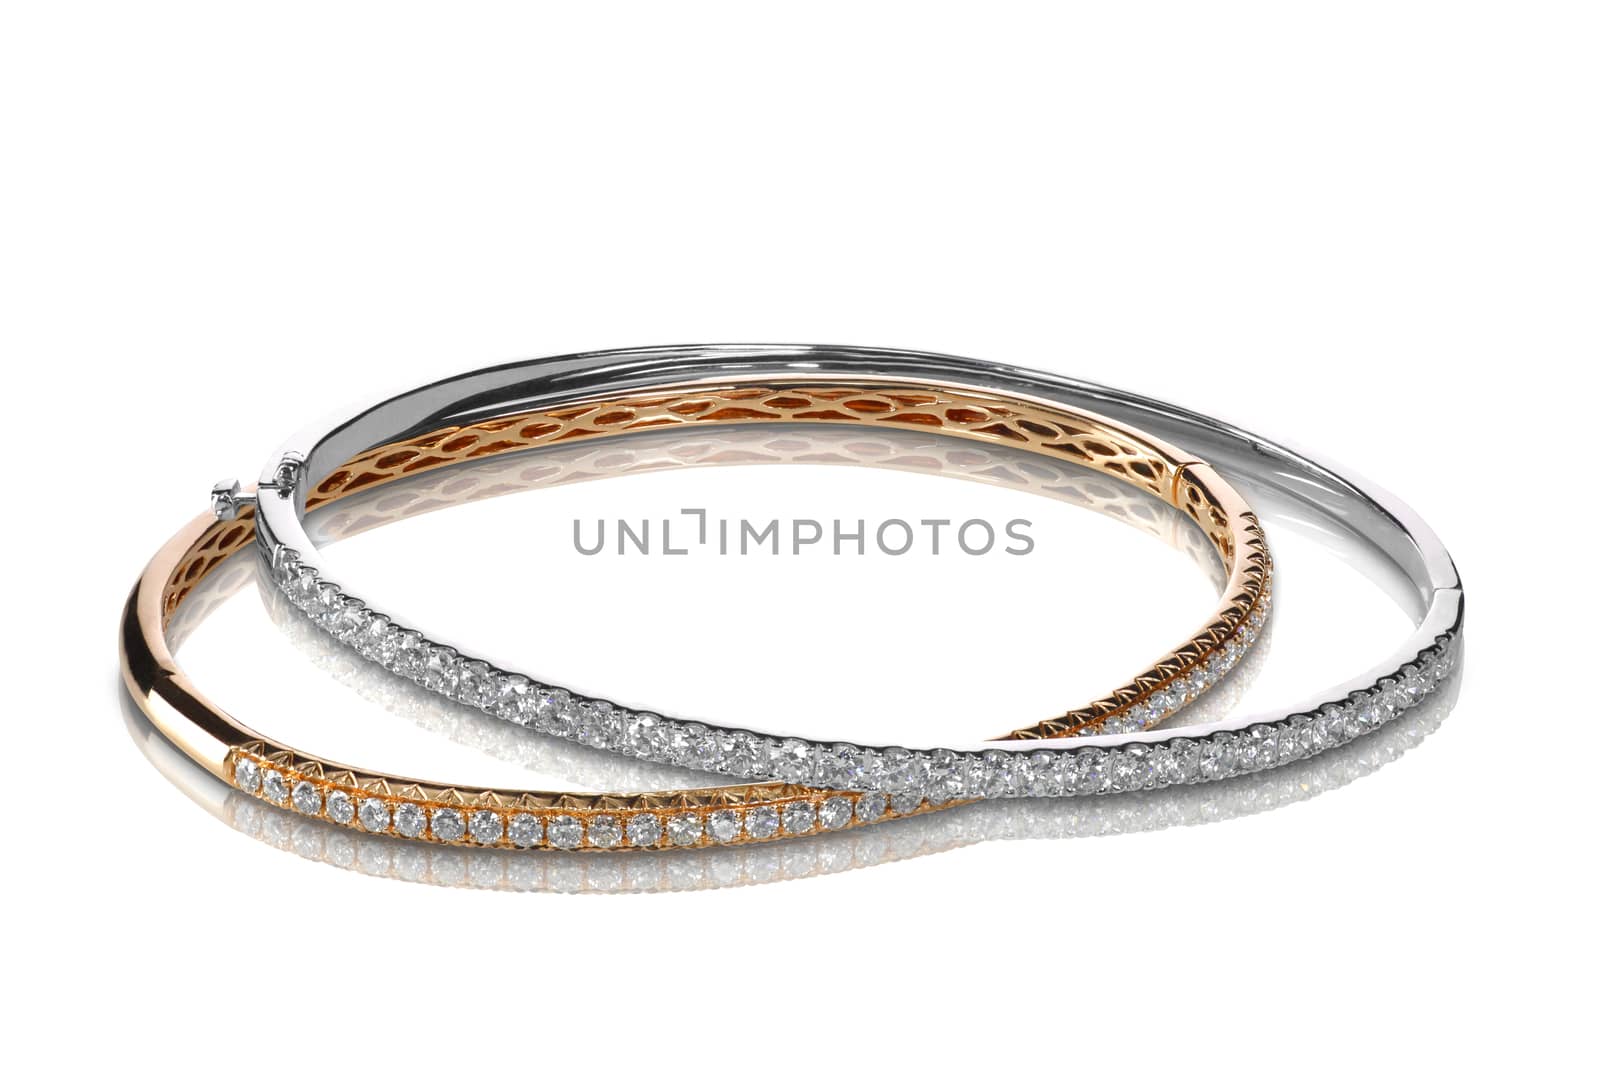 Set of diamond bracelets rose and white gold by fruitcocktail